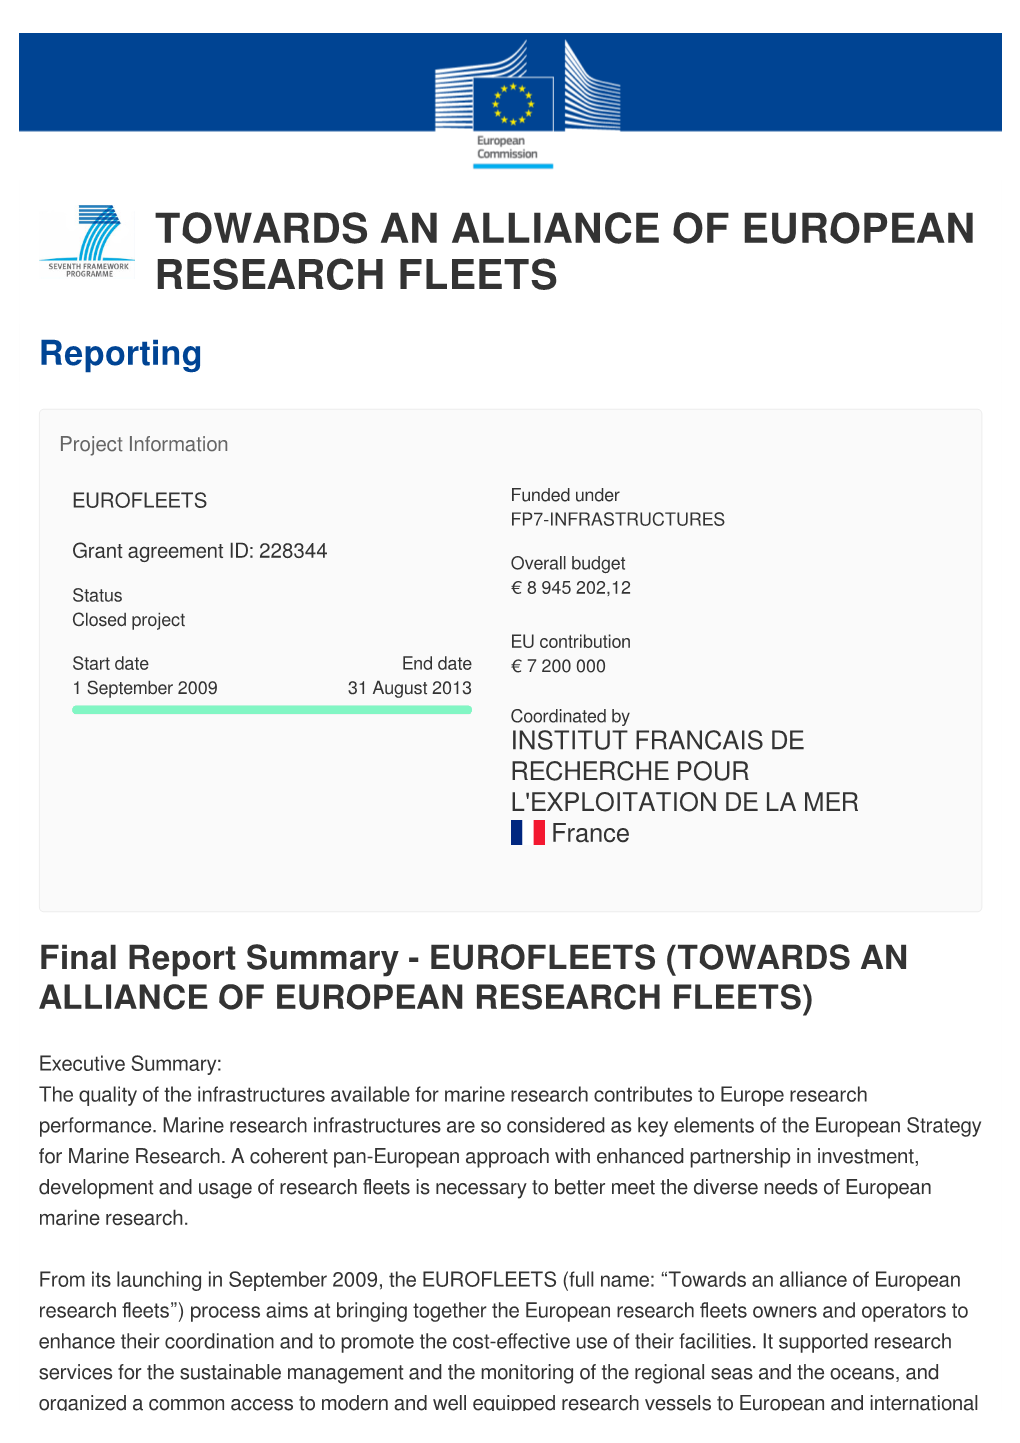 Towards an Alliance of European Research Fleets